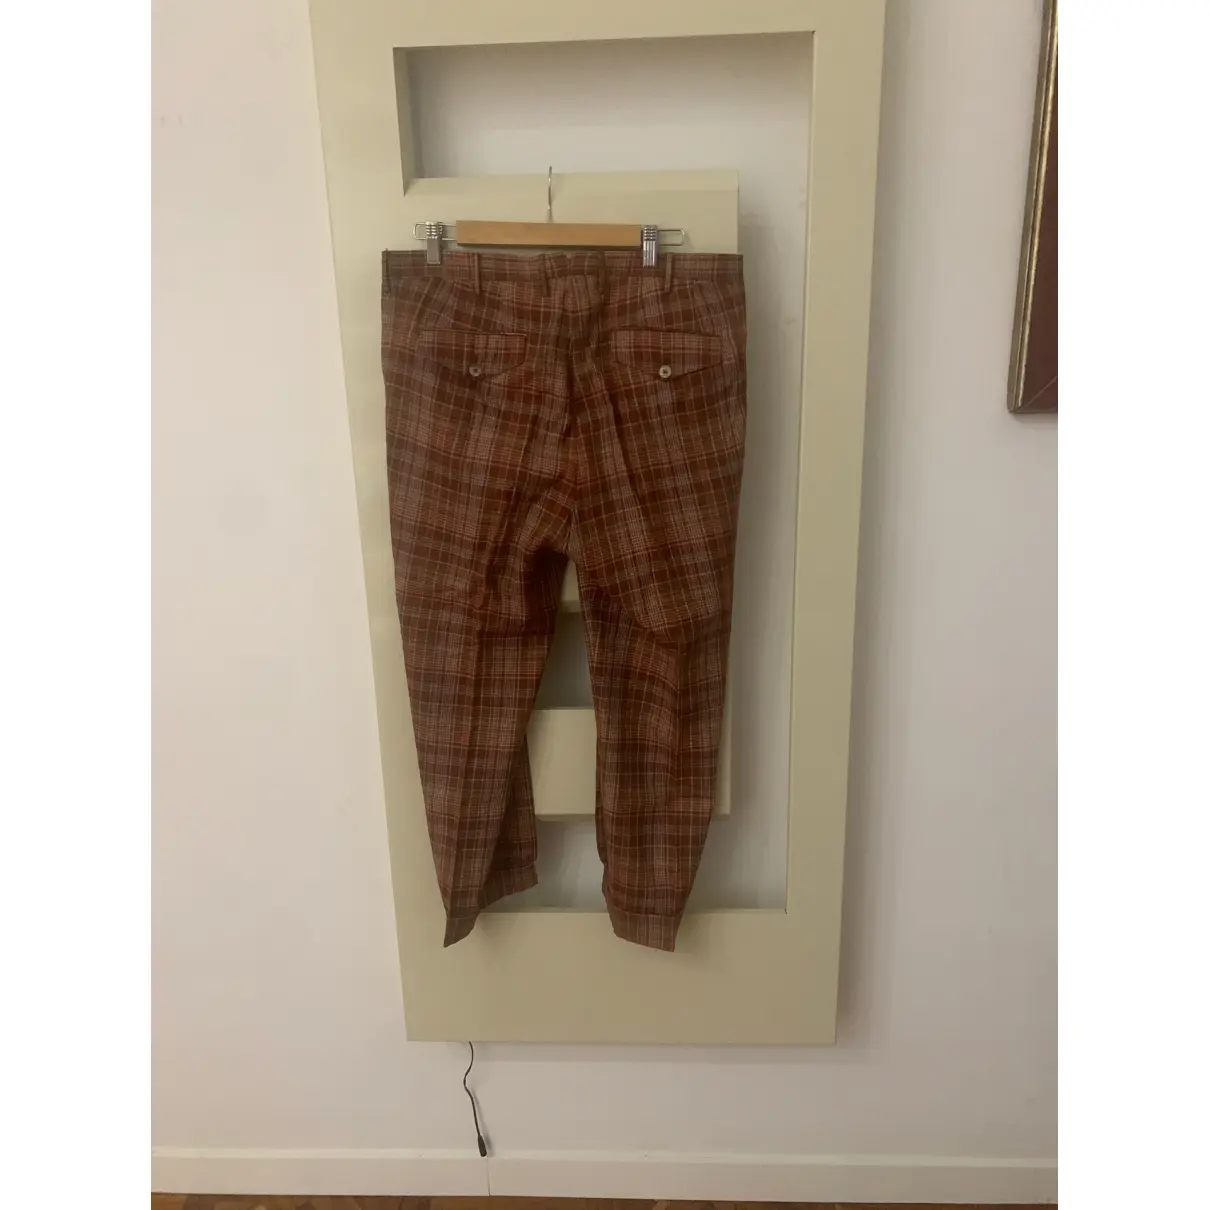 Buy Pt01 Silk trousers online